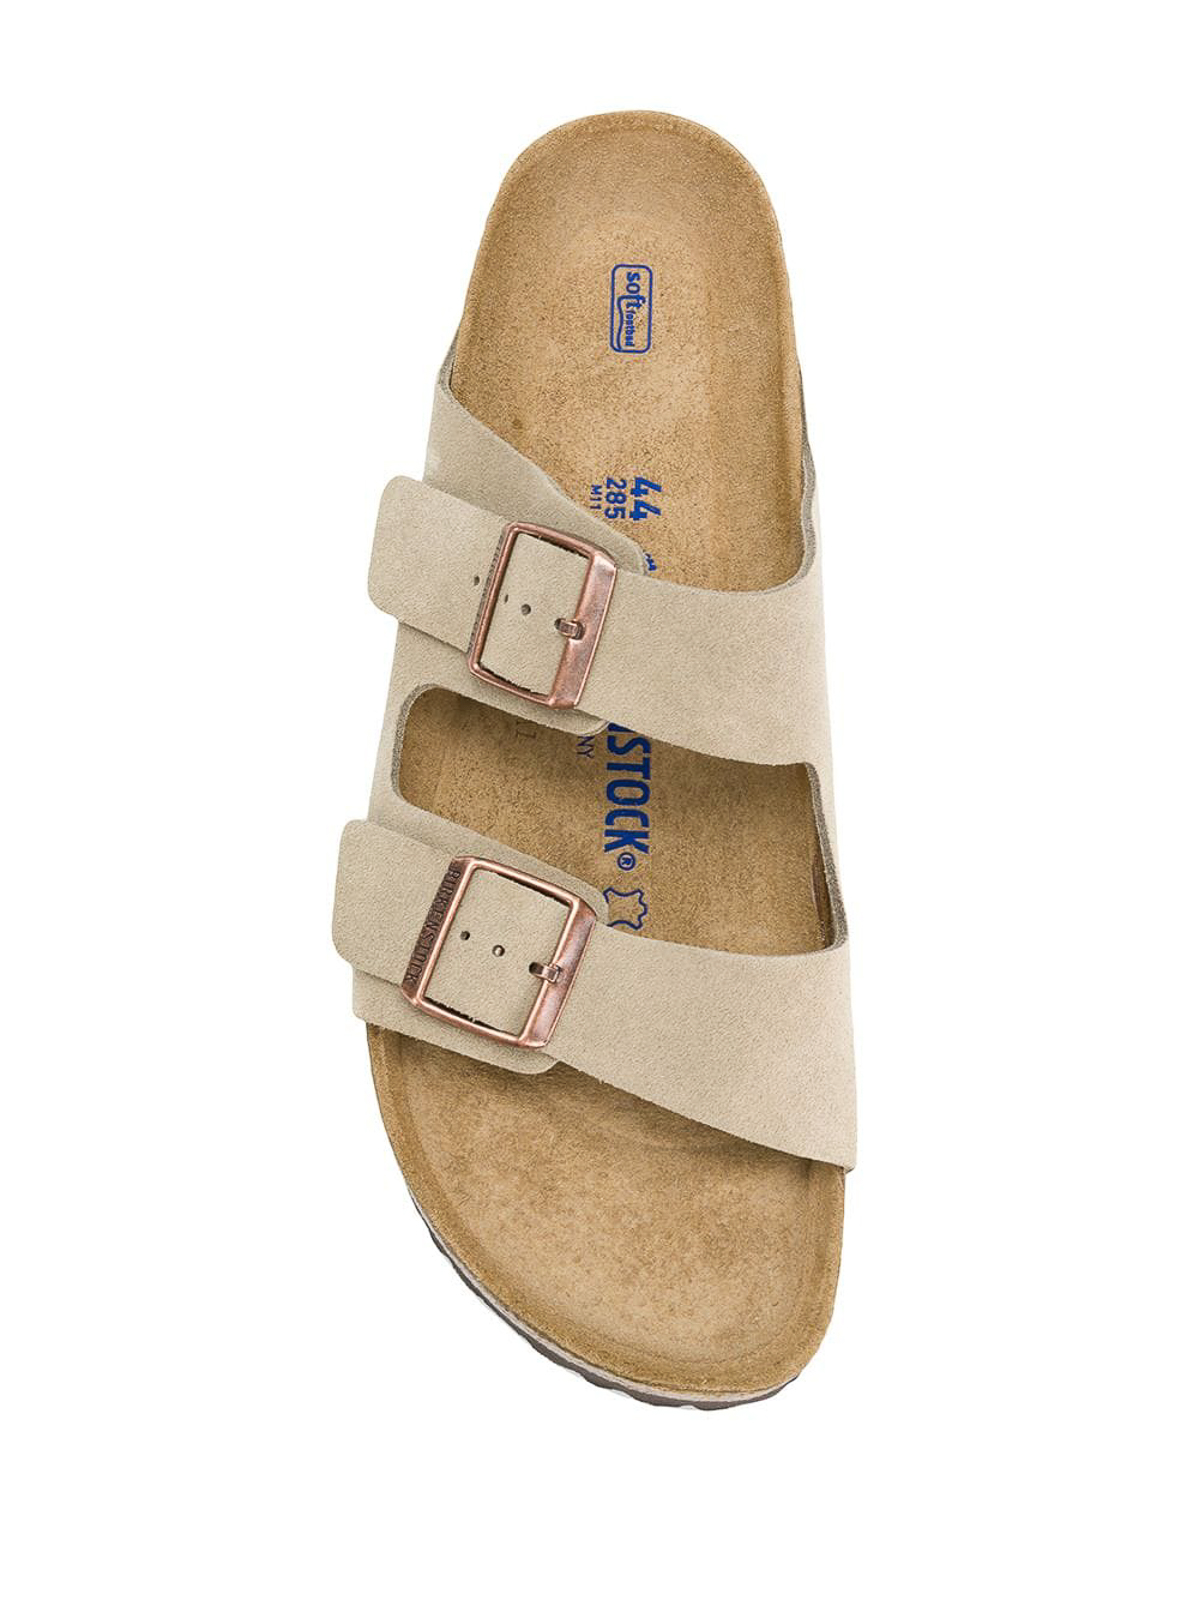 Sandals Birkenstock - arizona sandals - 951303ARIZONATAU